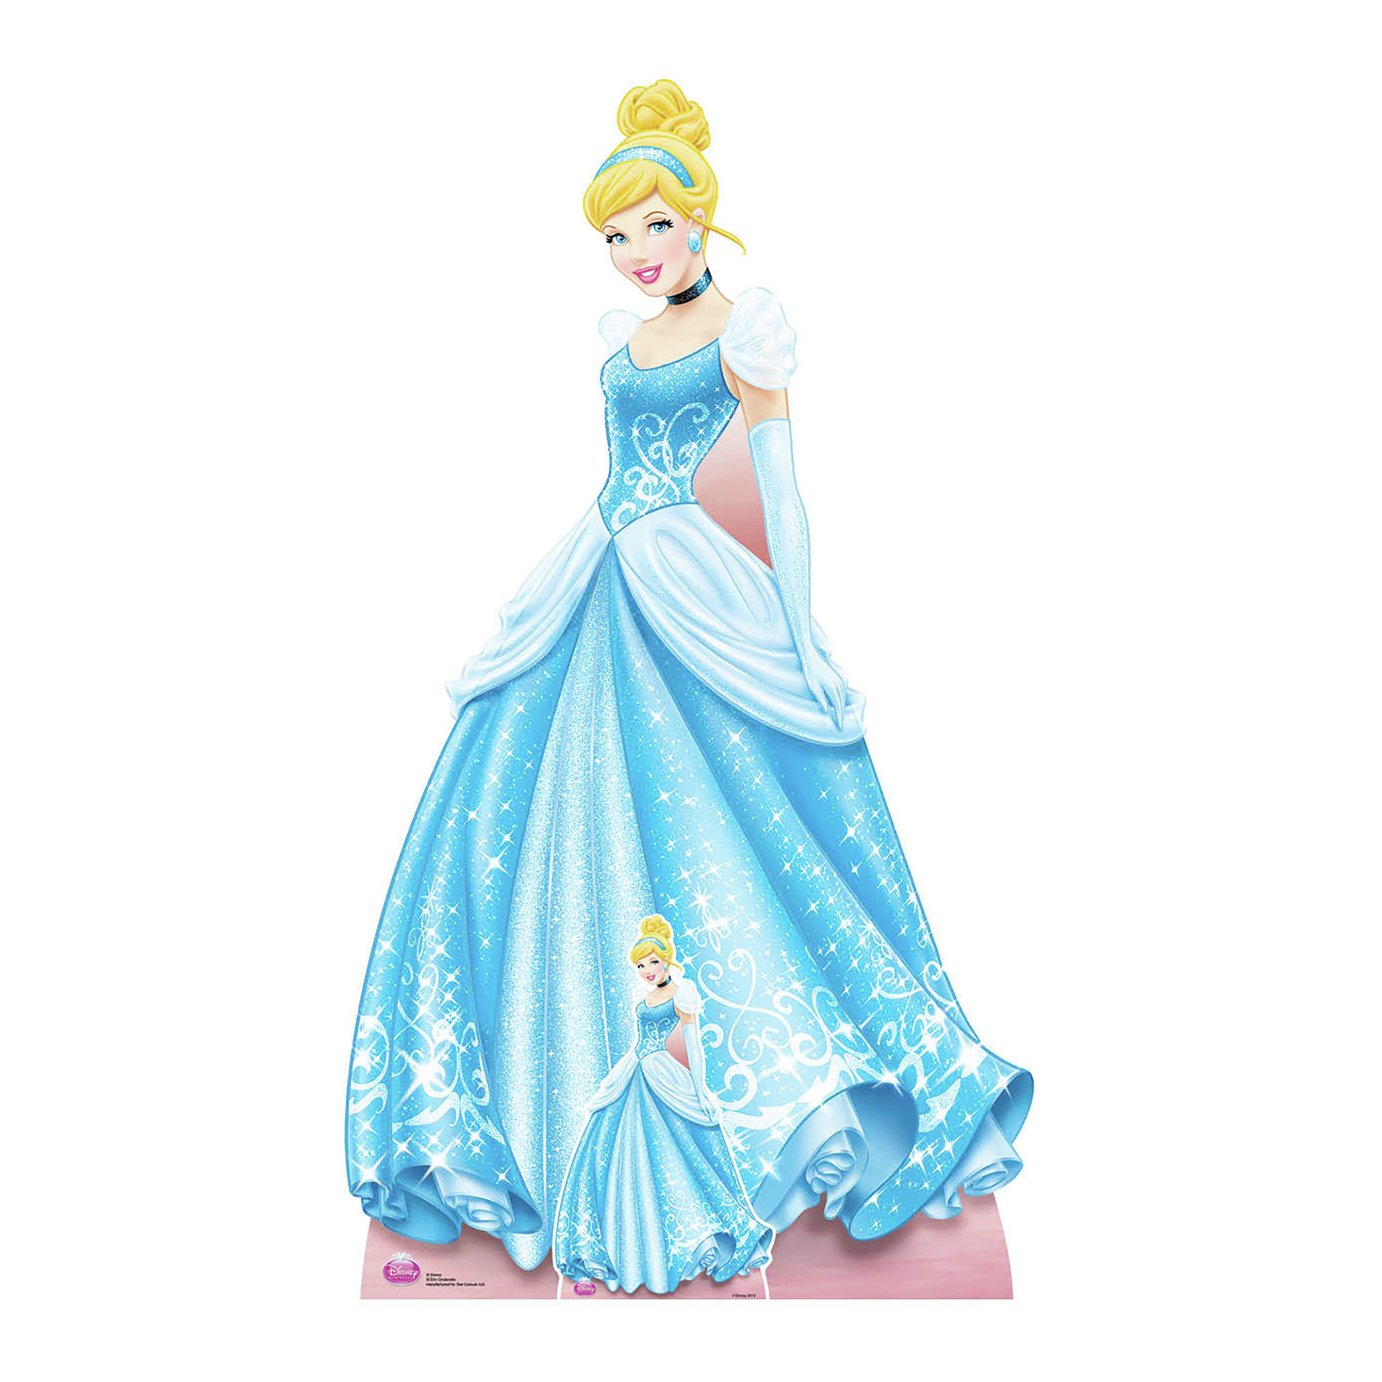 Star Cutouts Disney Princess Cinderella Cardboard Cutout